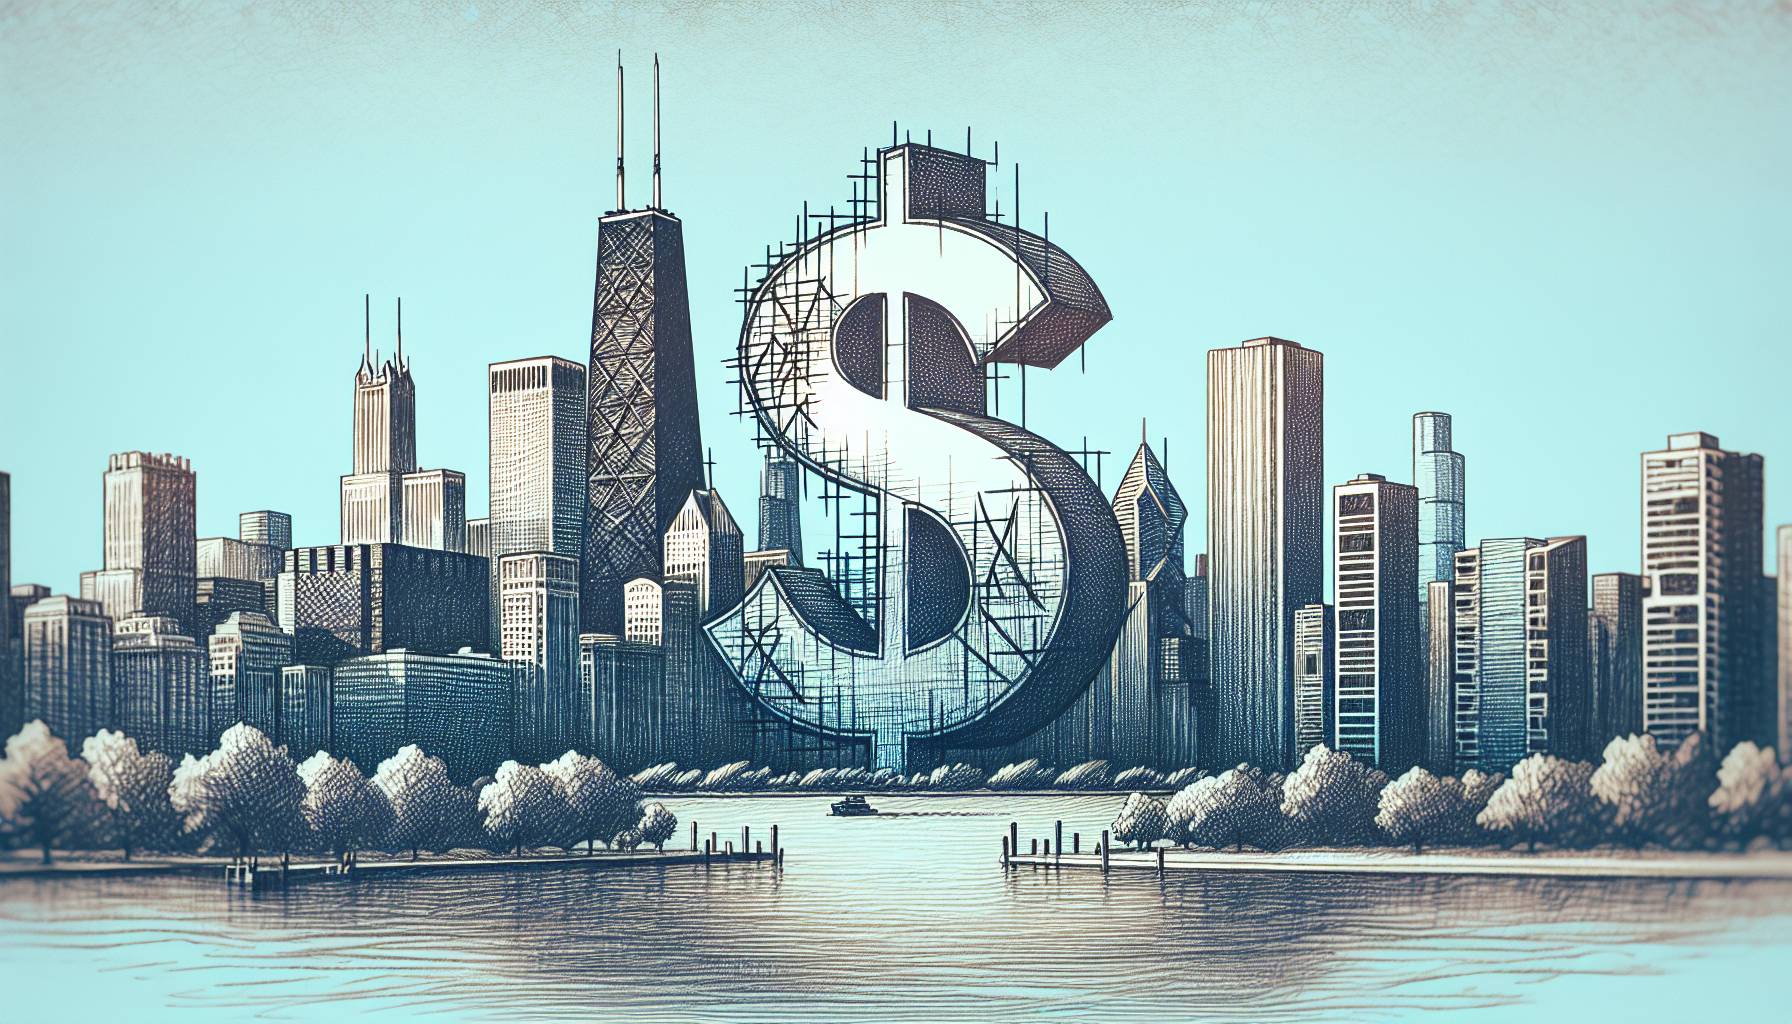 "Chicago Luxury Plan"